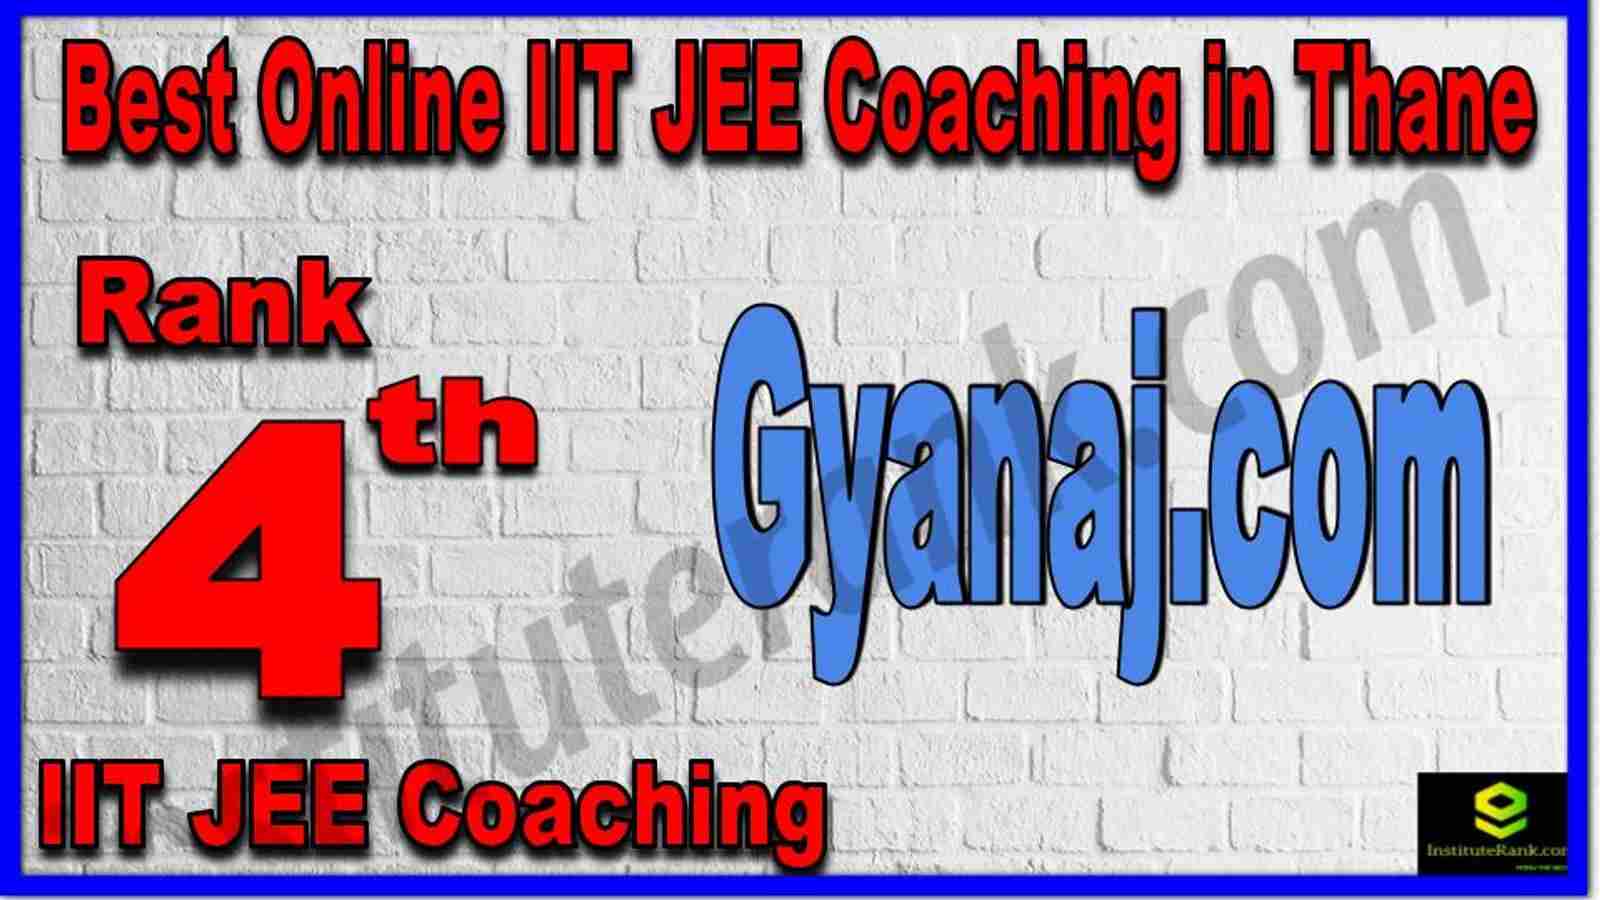 Rank 4th Best Online IIT JEE Coaching in Thane